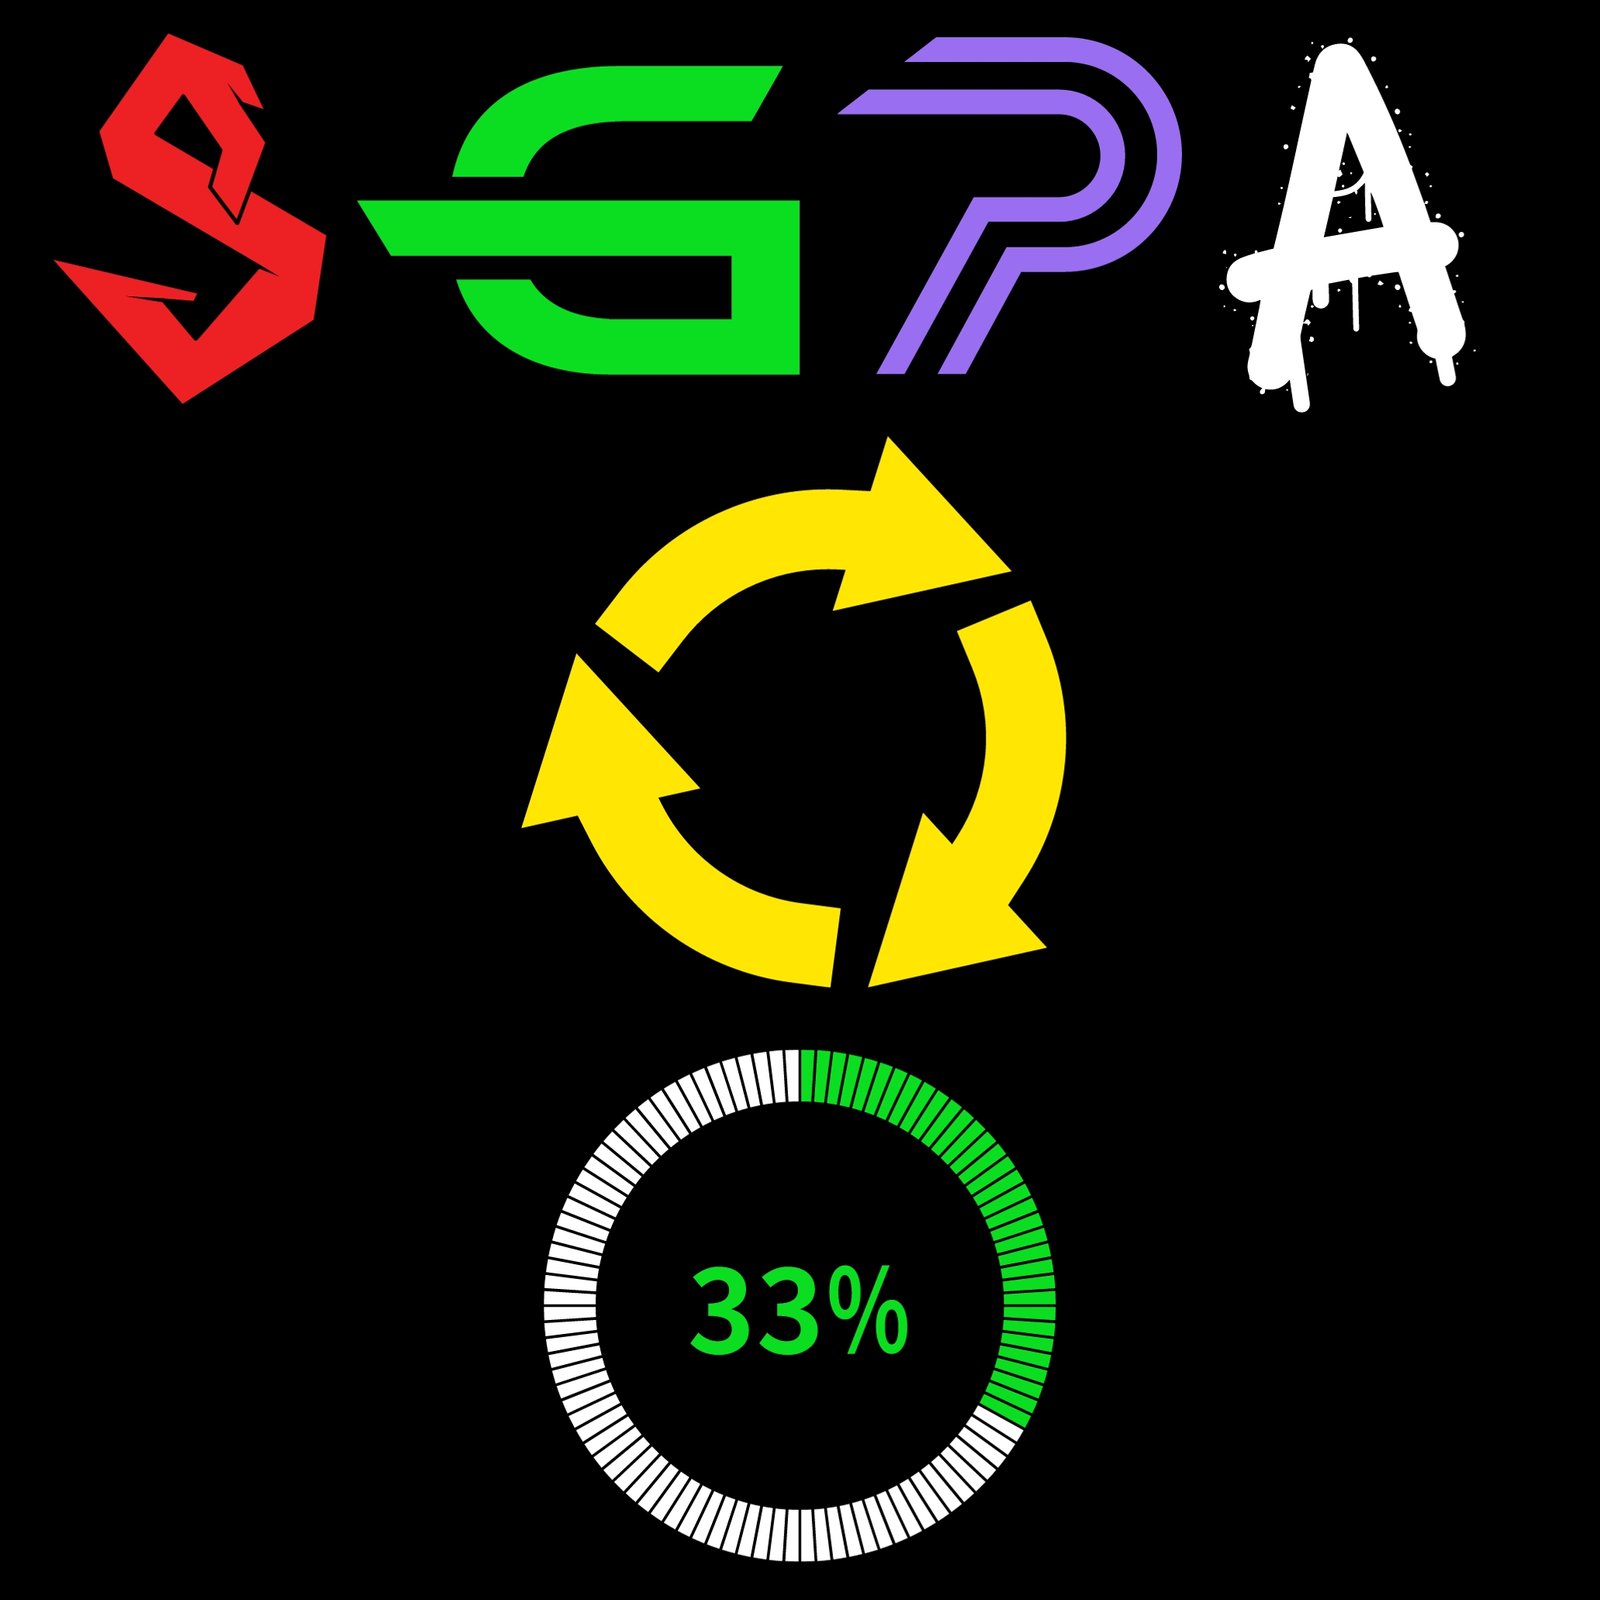 SGPA To Percentage